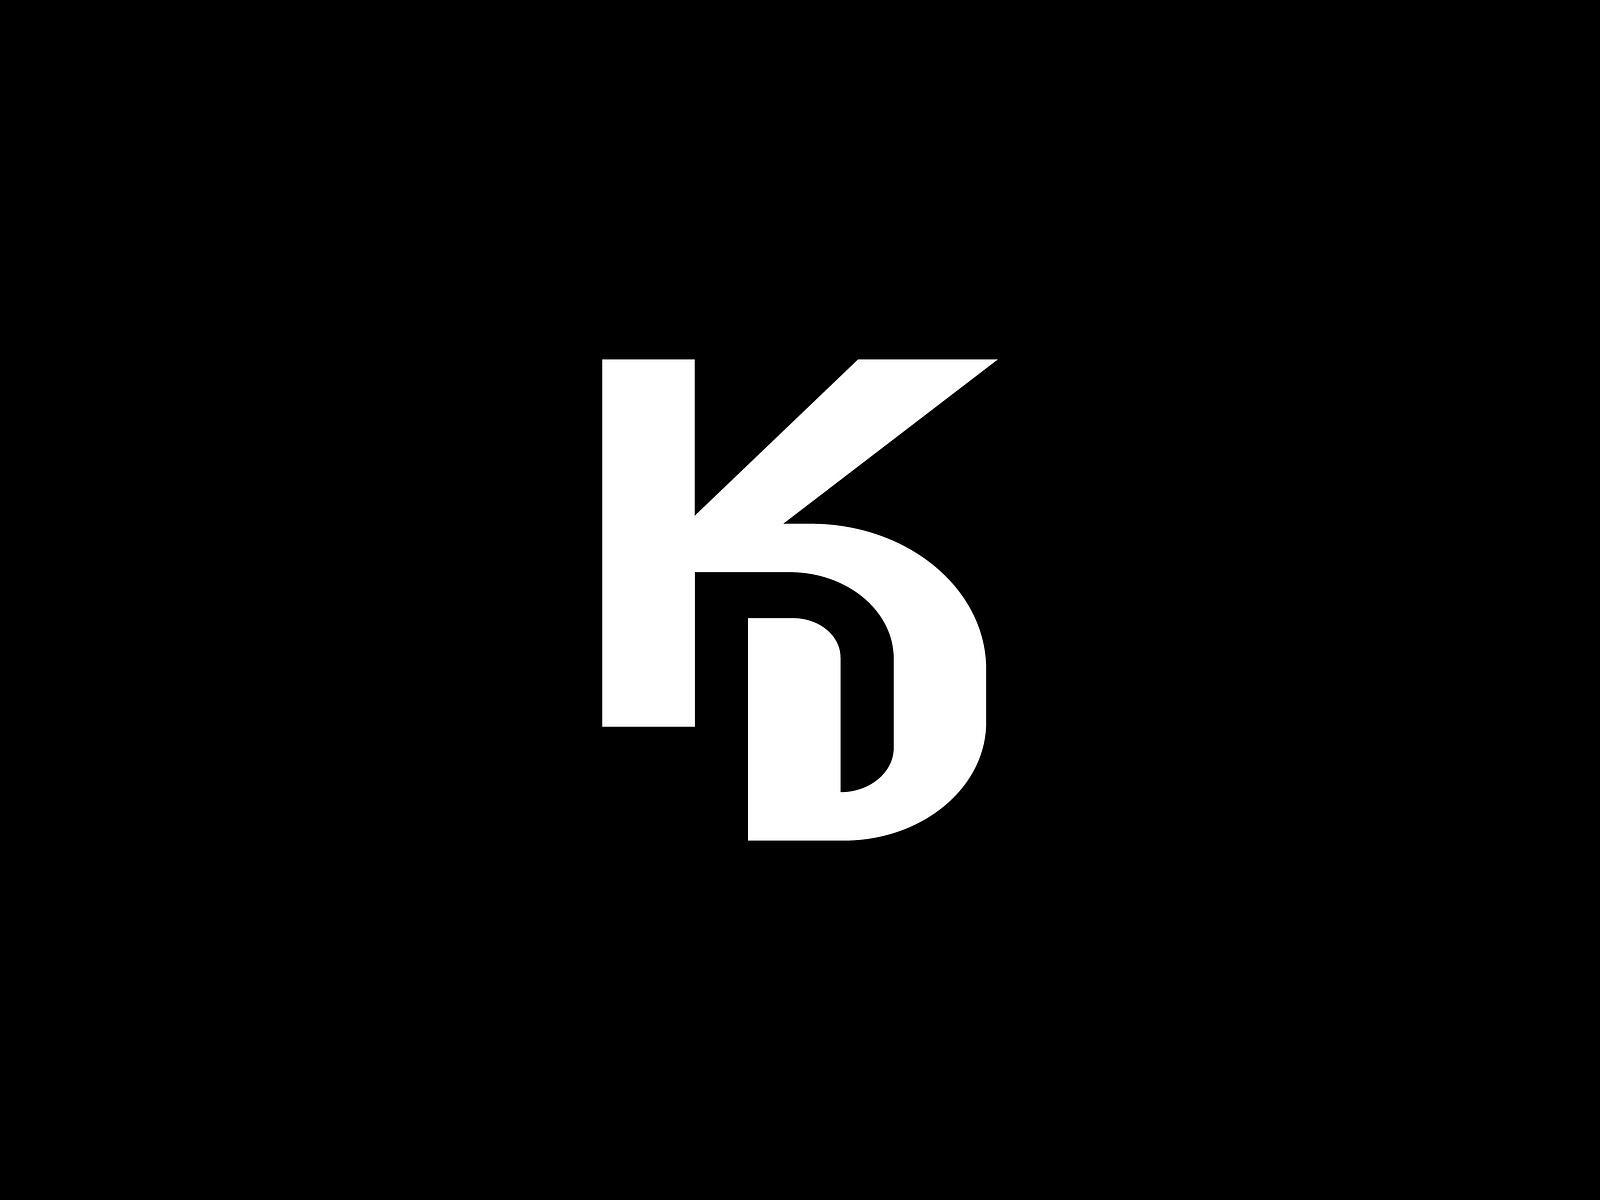 KD logo by Sayedur Rahman on Dribbble